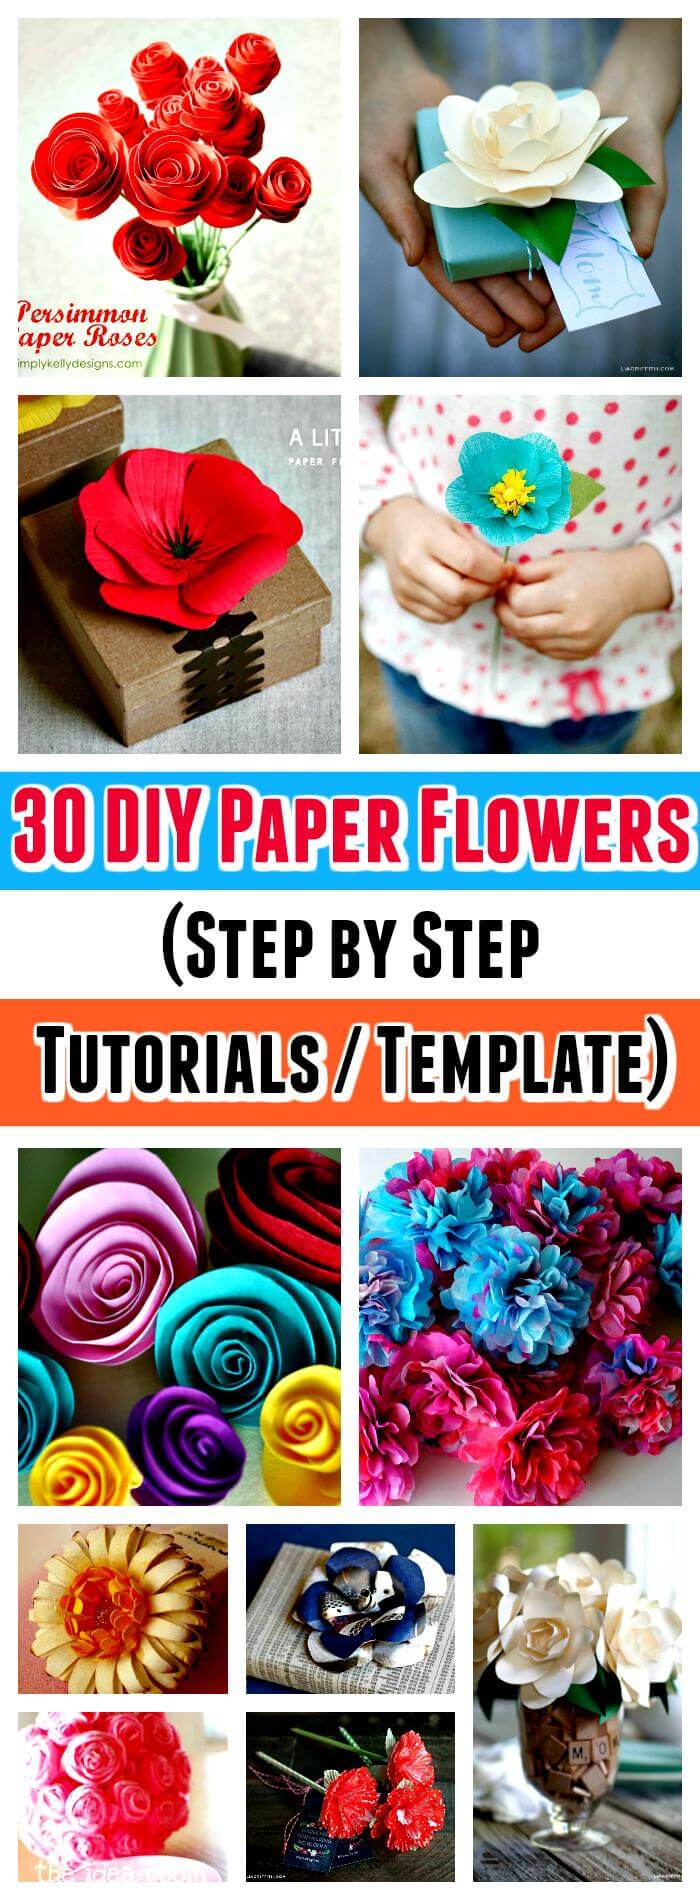 30-DIY-Paper-Flowers-Step-by-Step-Tutorials-Template